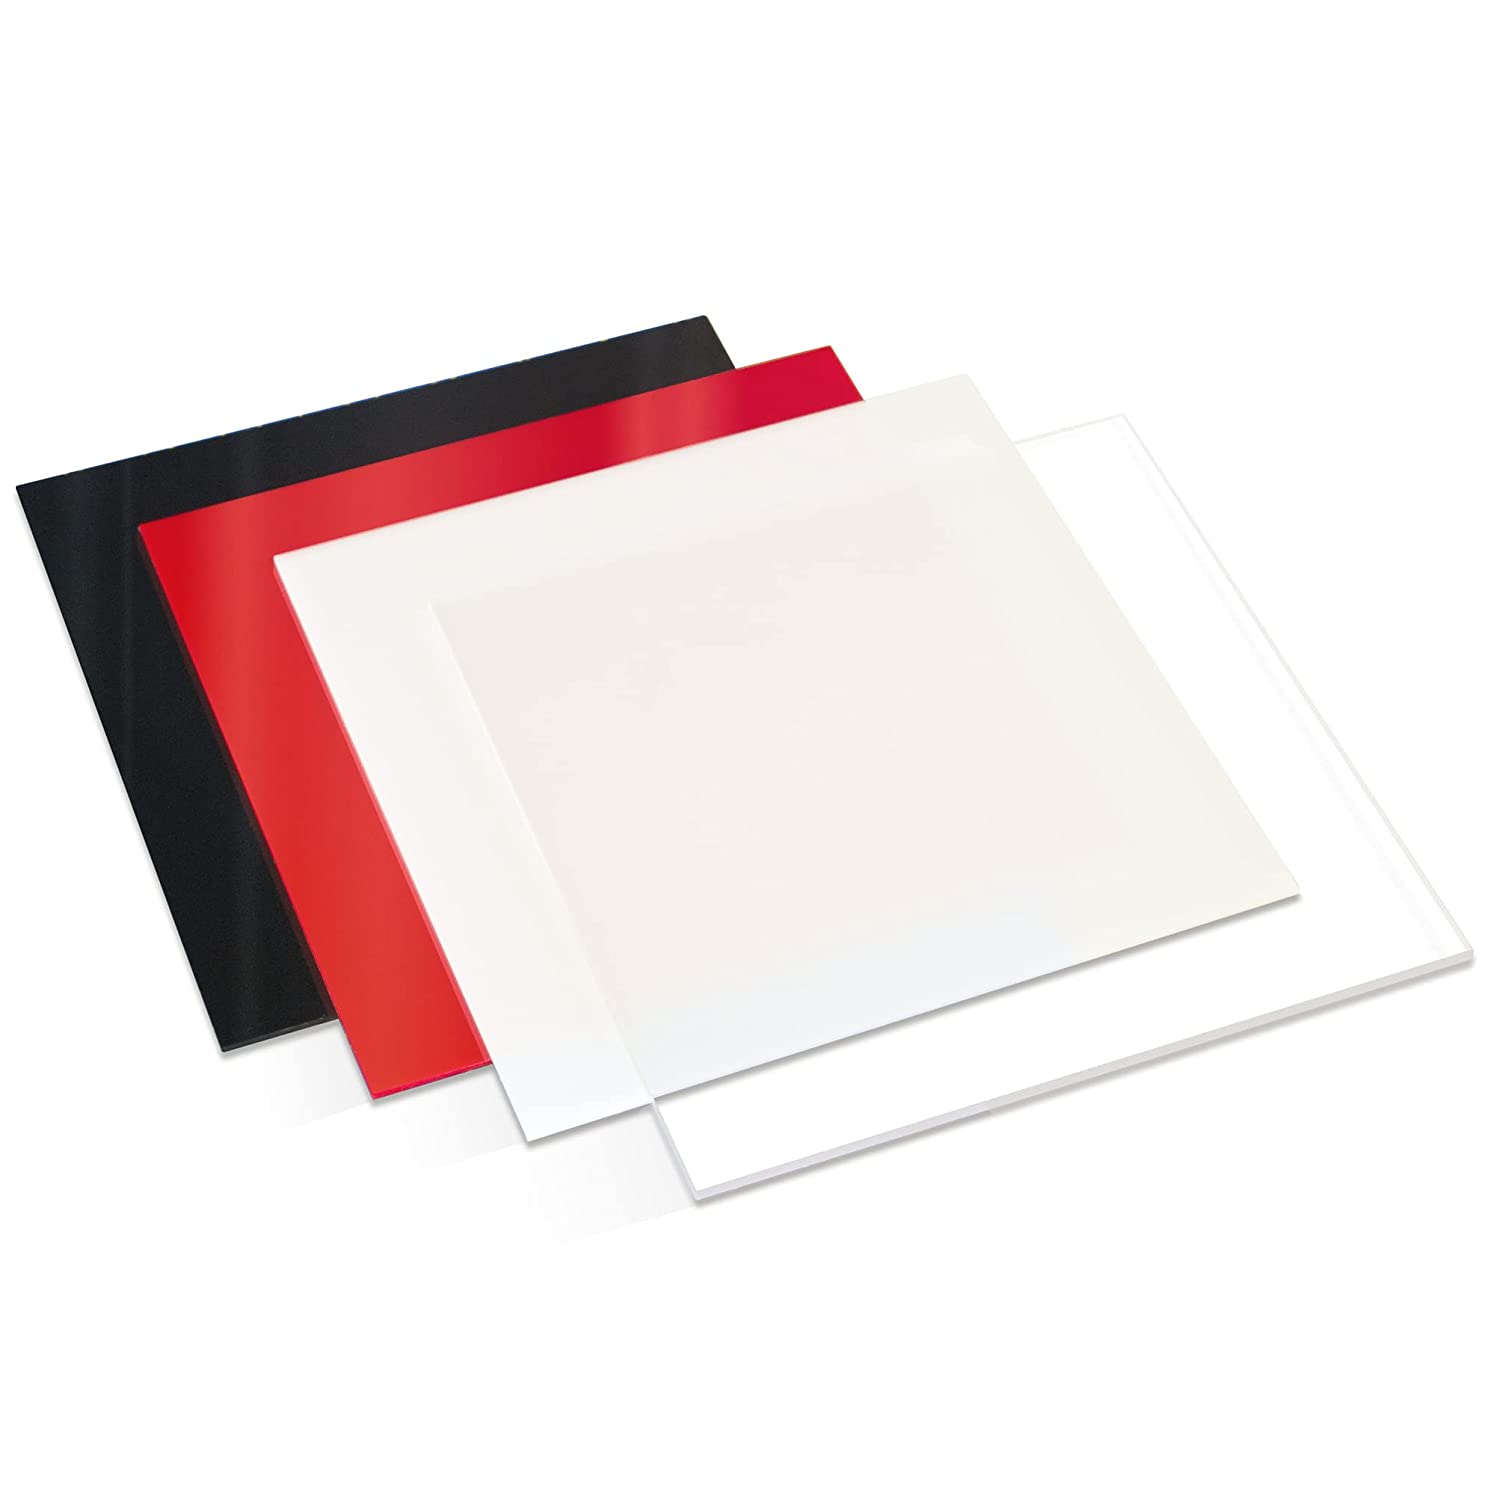 Buy SPEEDYORDERS Acrylic Mirror Sheet Plexiglass 12 x 12 Inches